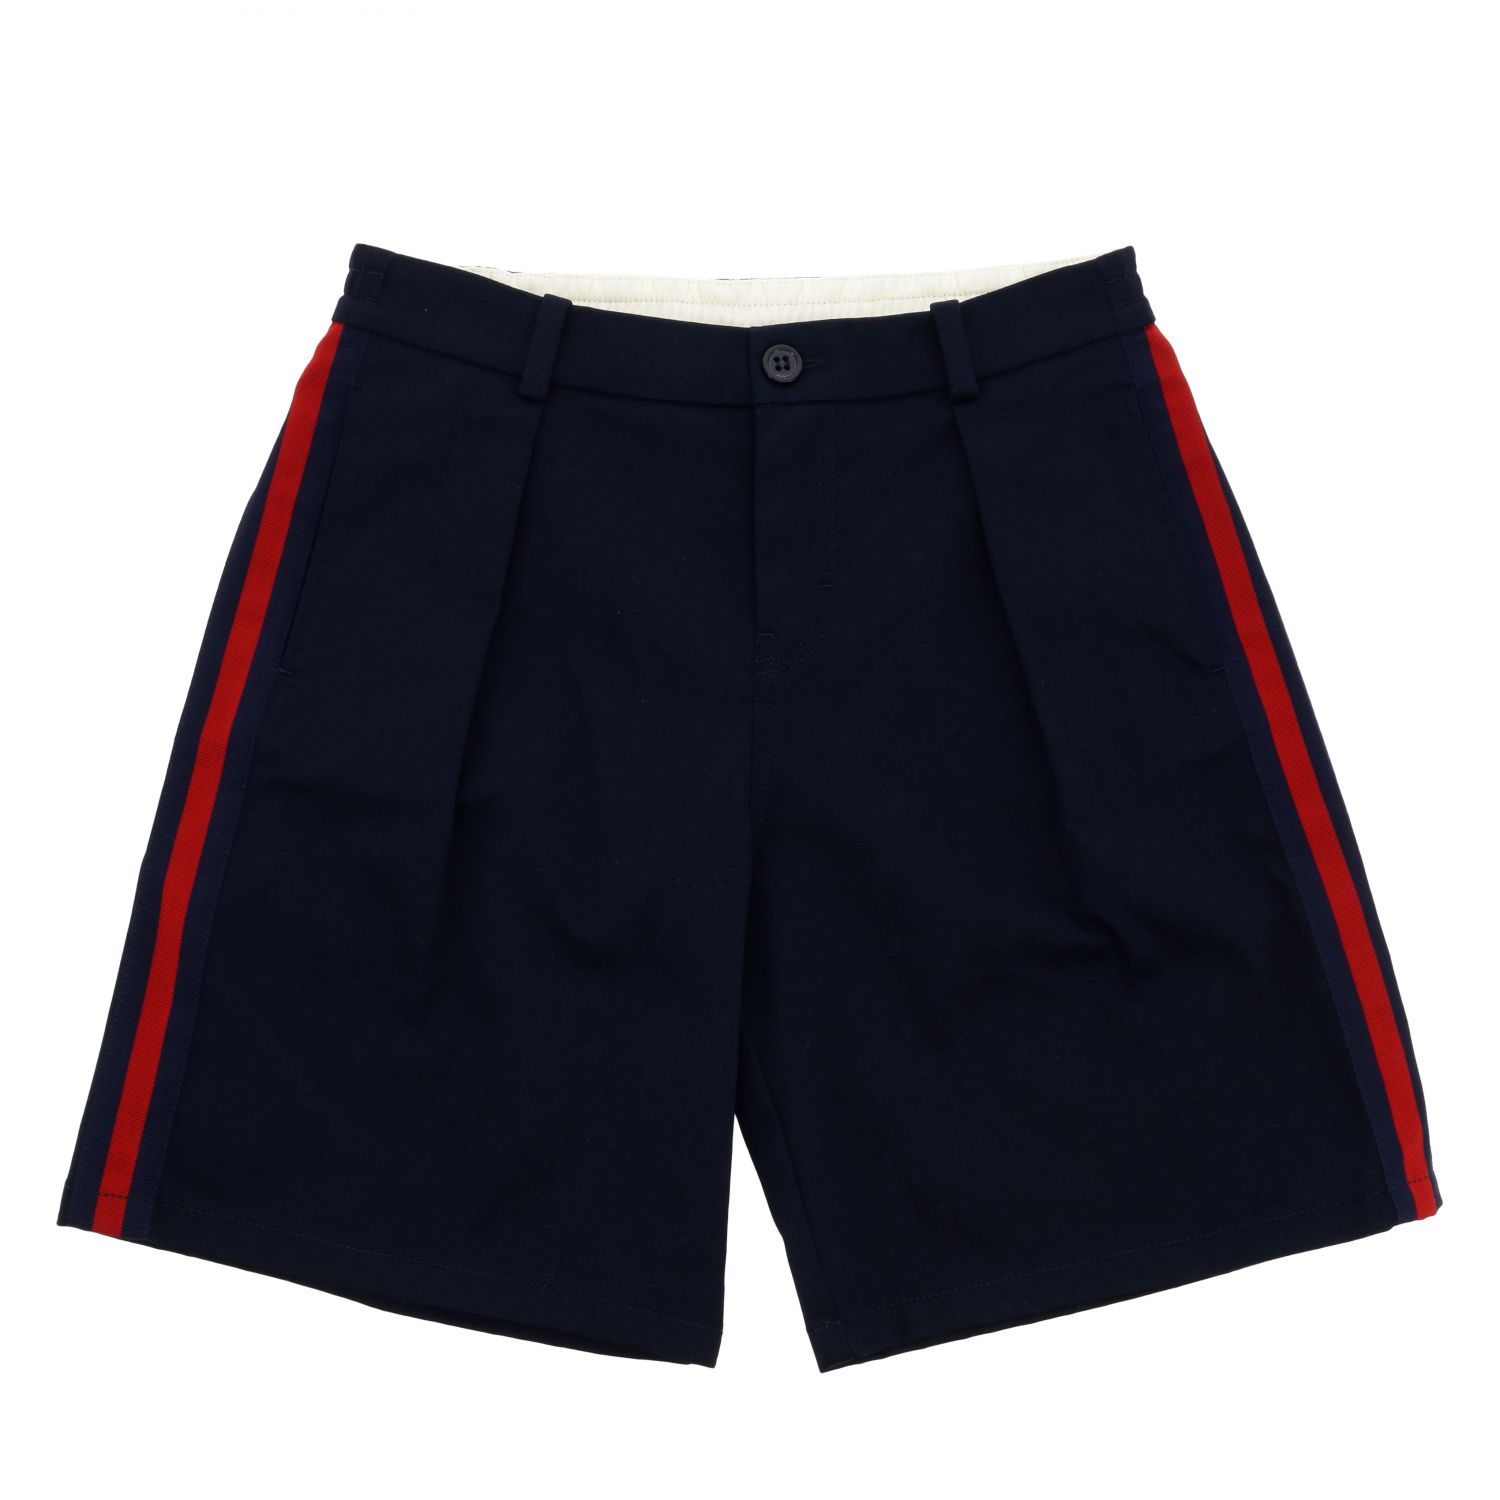 GUCCI: wide shorts with Web bands - Blue | Gucci shorts 600269 XWAEW